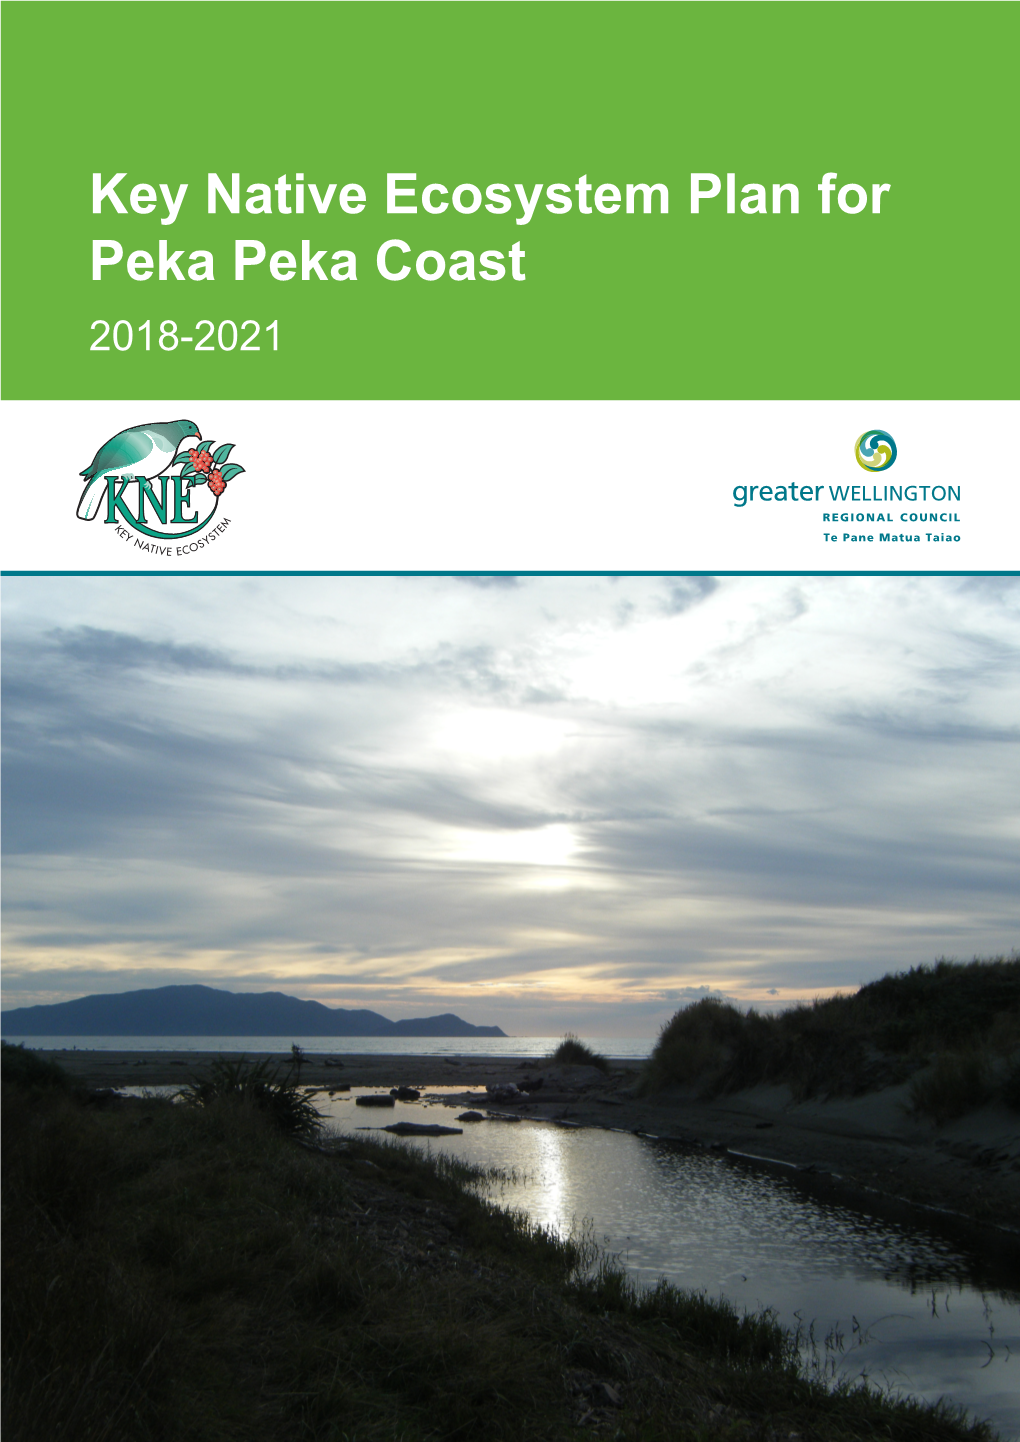 Key Native Ecosystem Plan for Peka Peka Coast 2018-2021